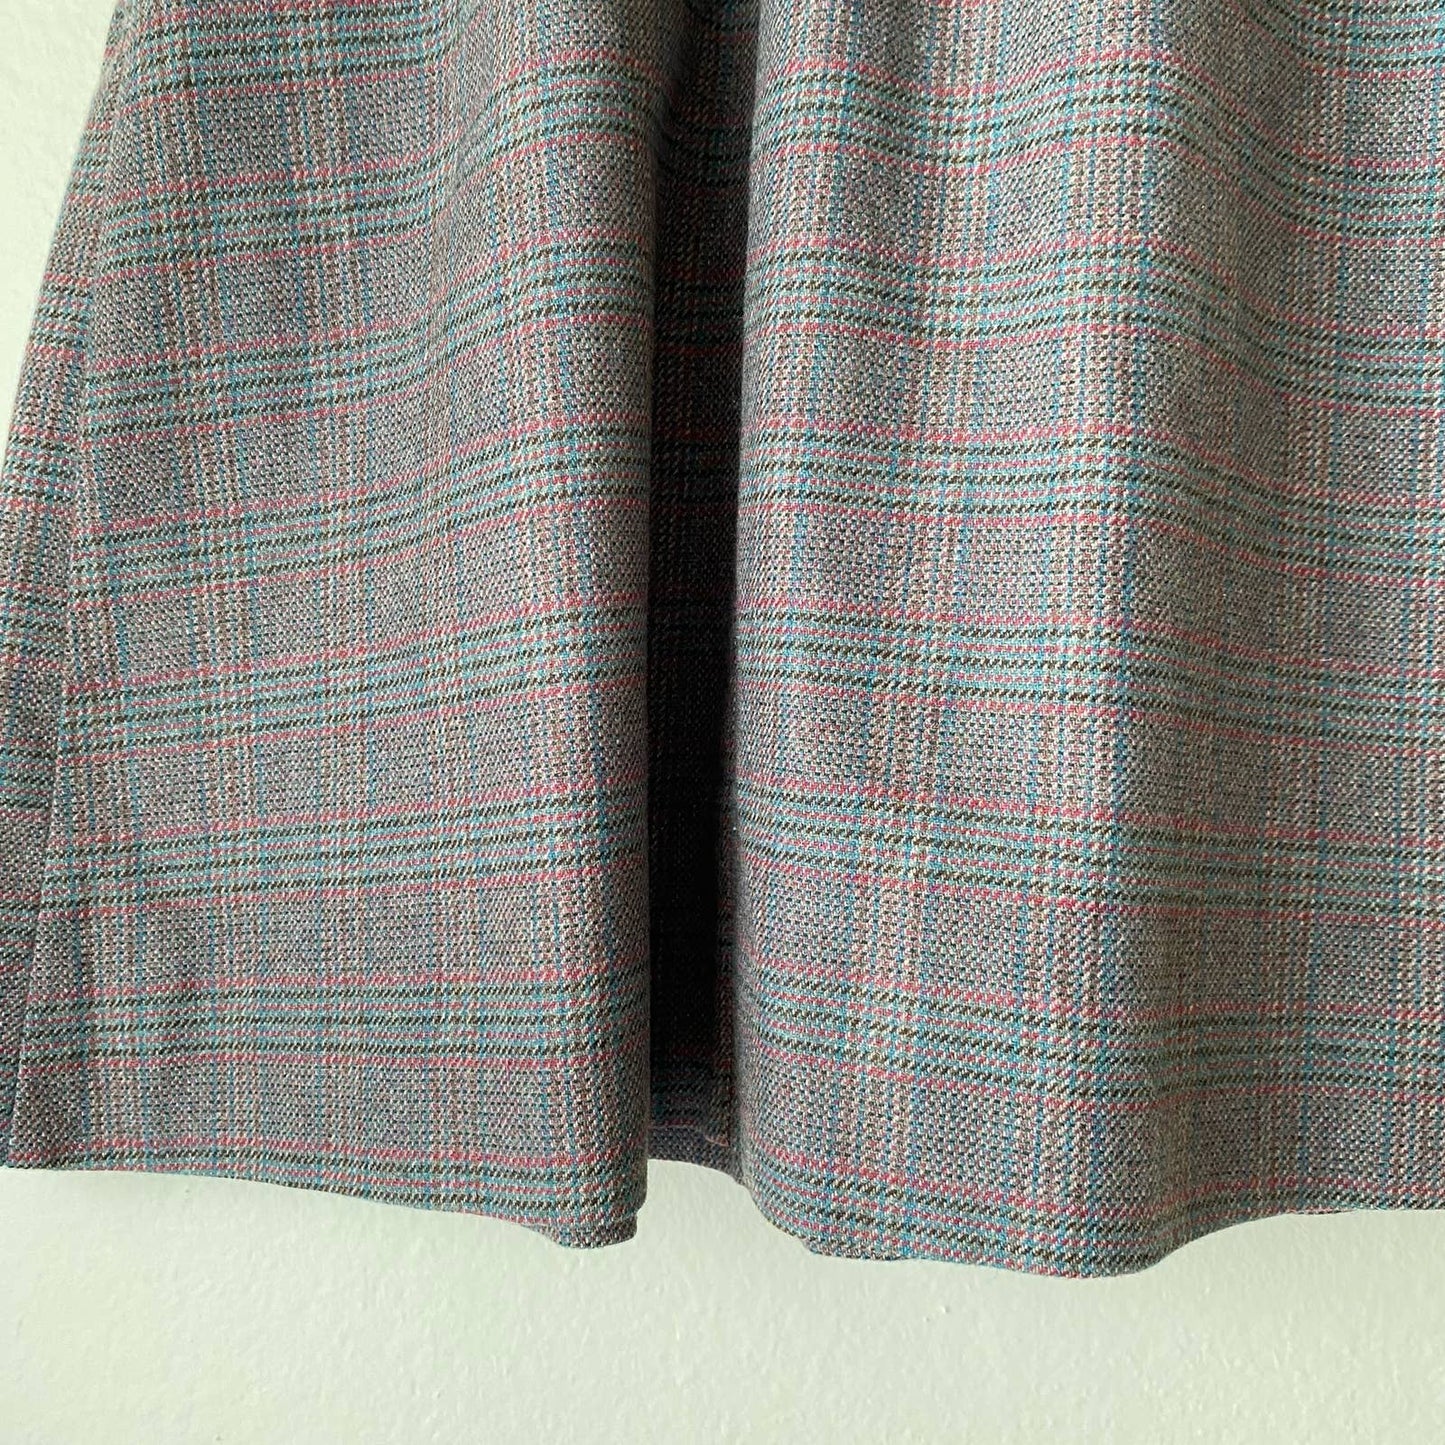 Glendora sz 7/8 VINTAGE plaid A-line vintage with pockets midi skirt